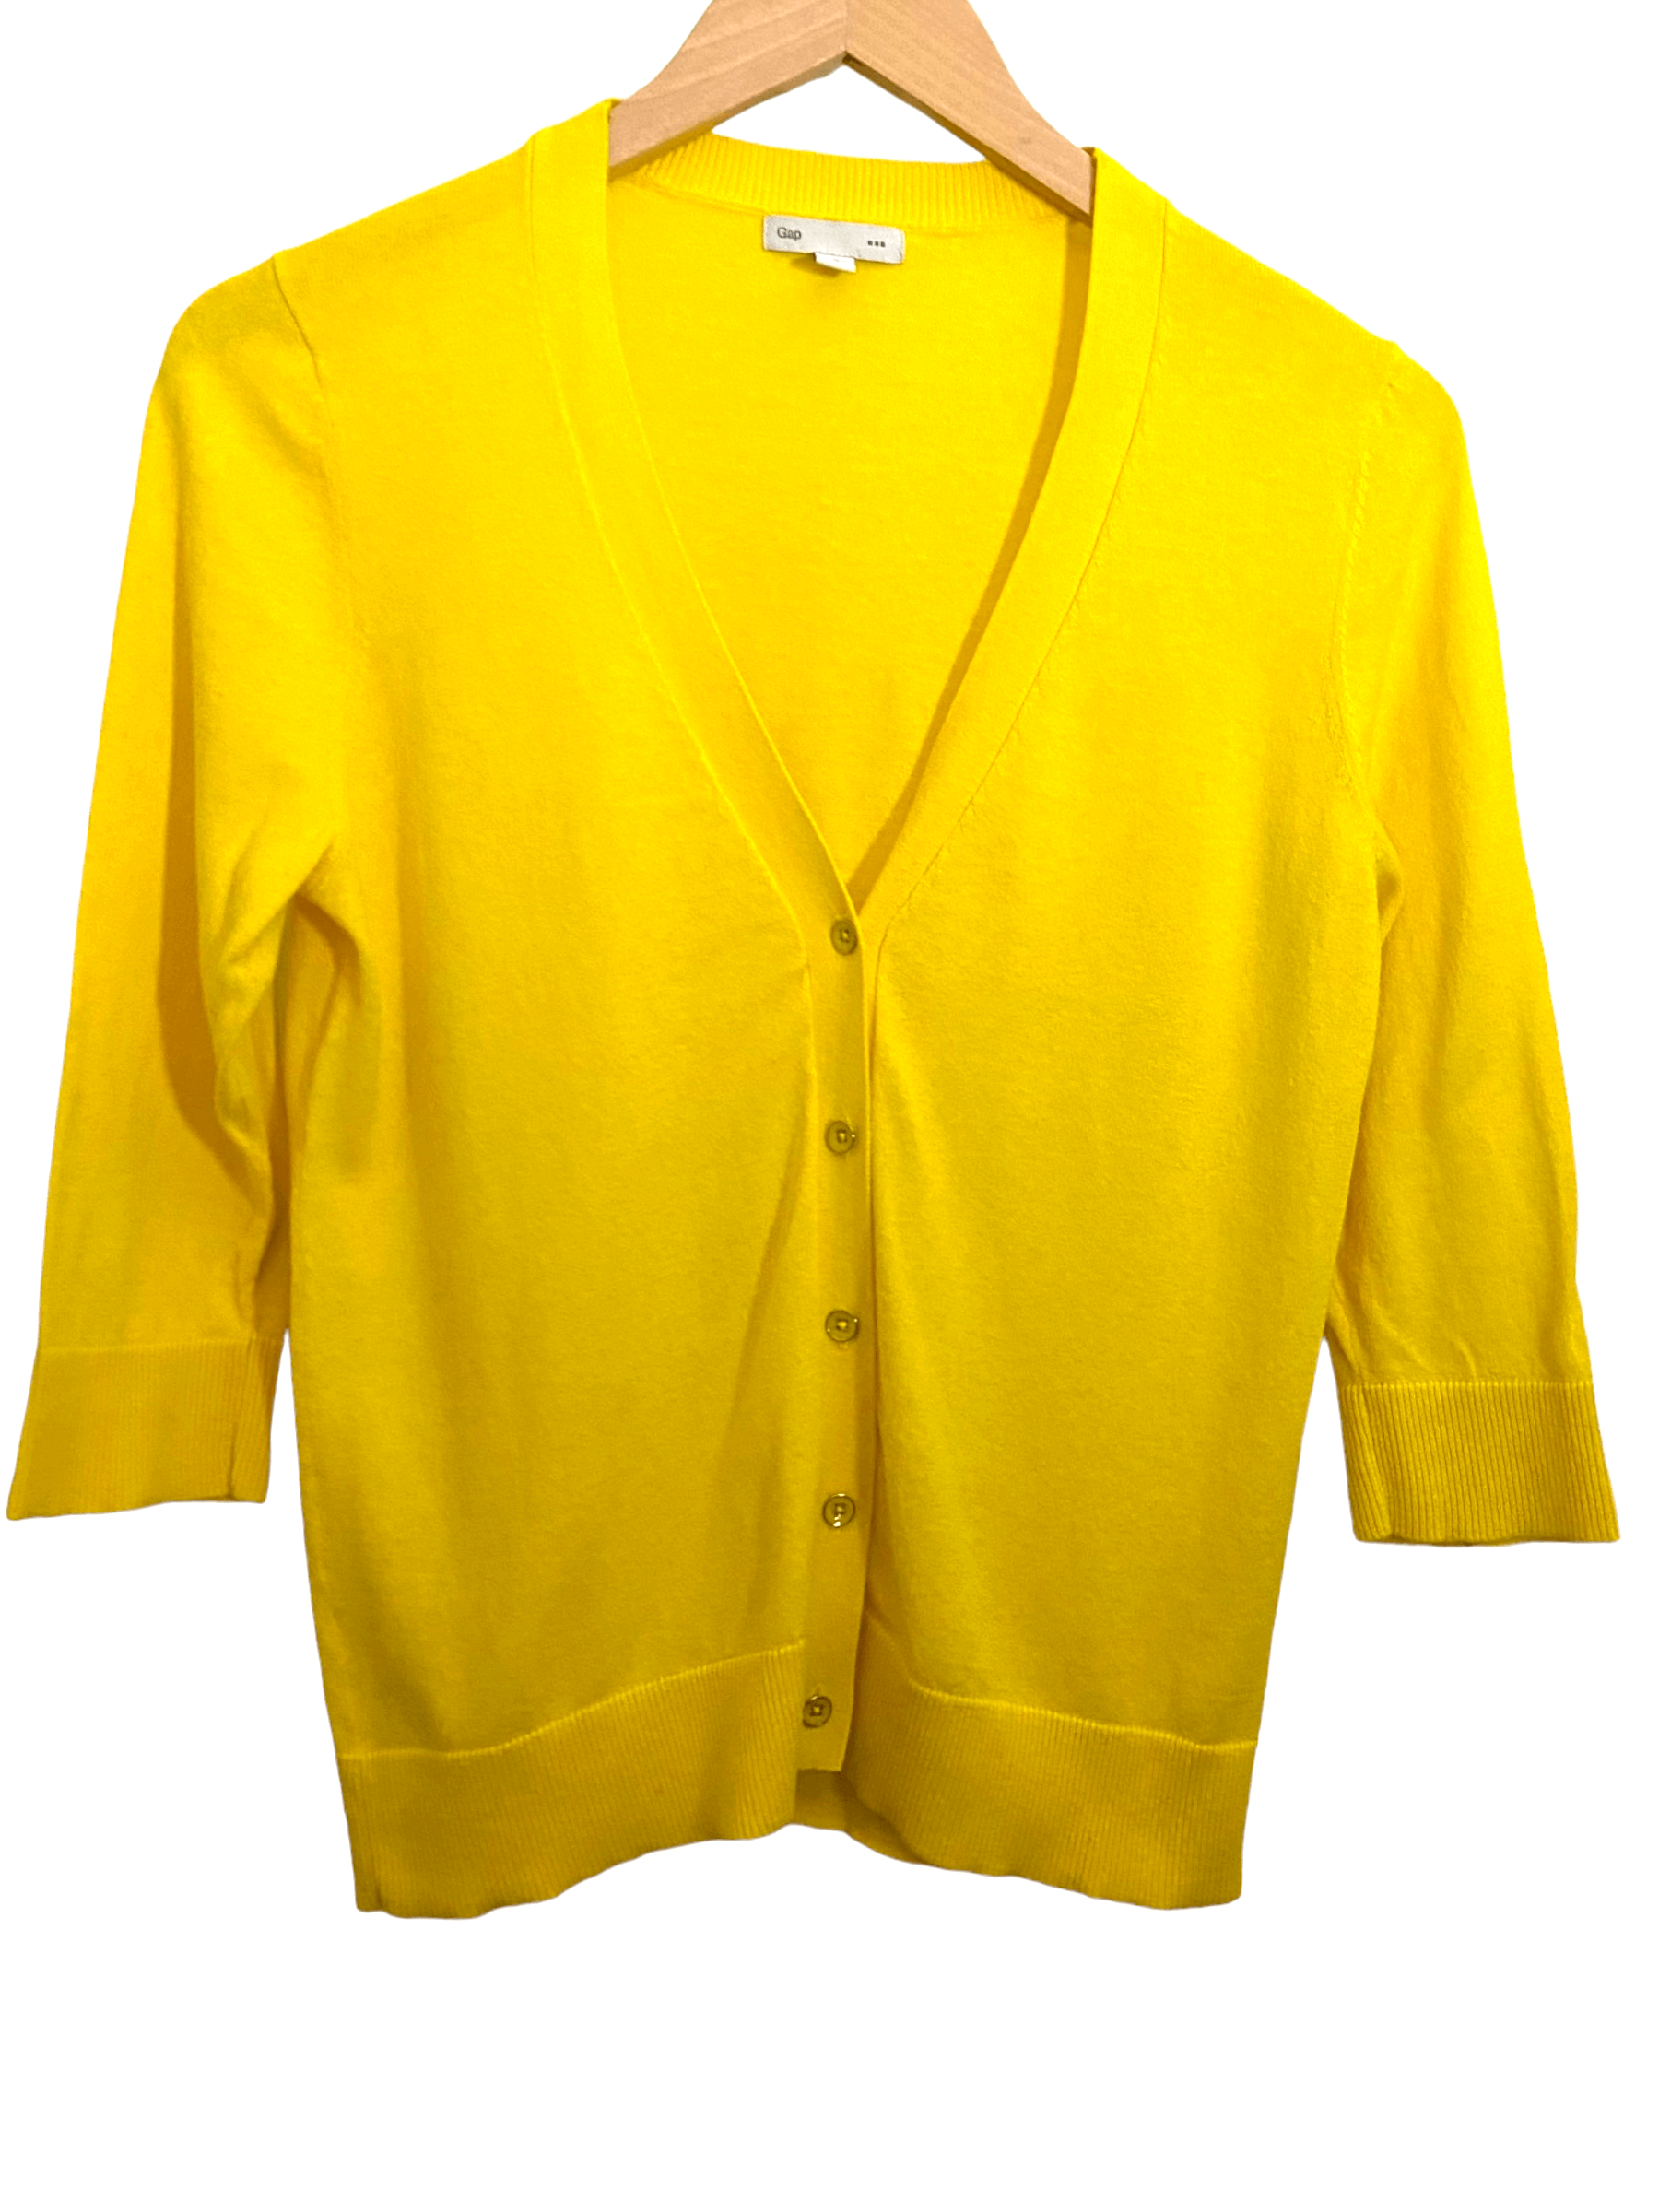 Bright Winter GAP yellow cardigan sweater